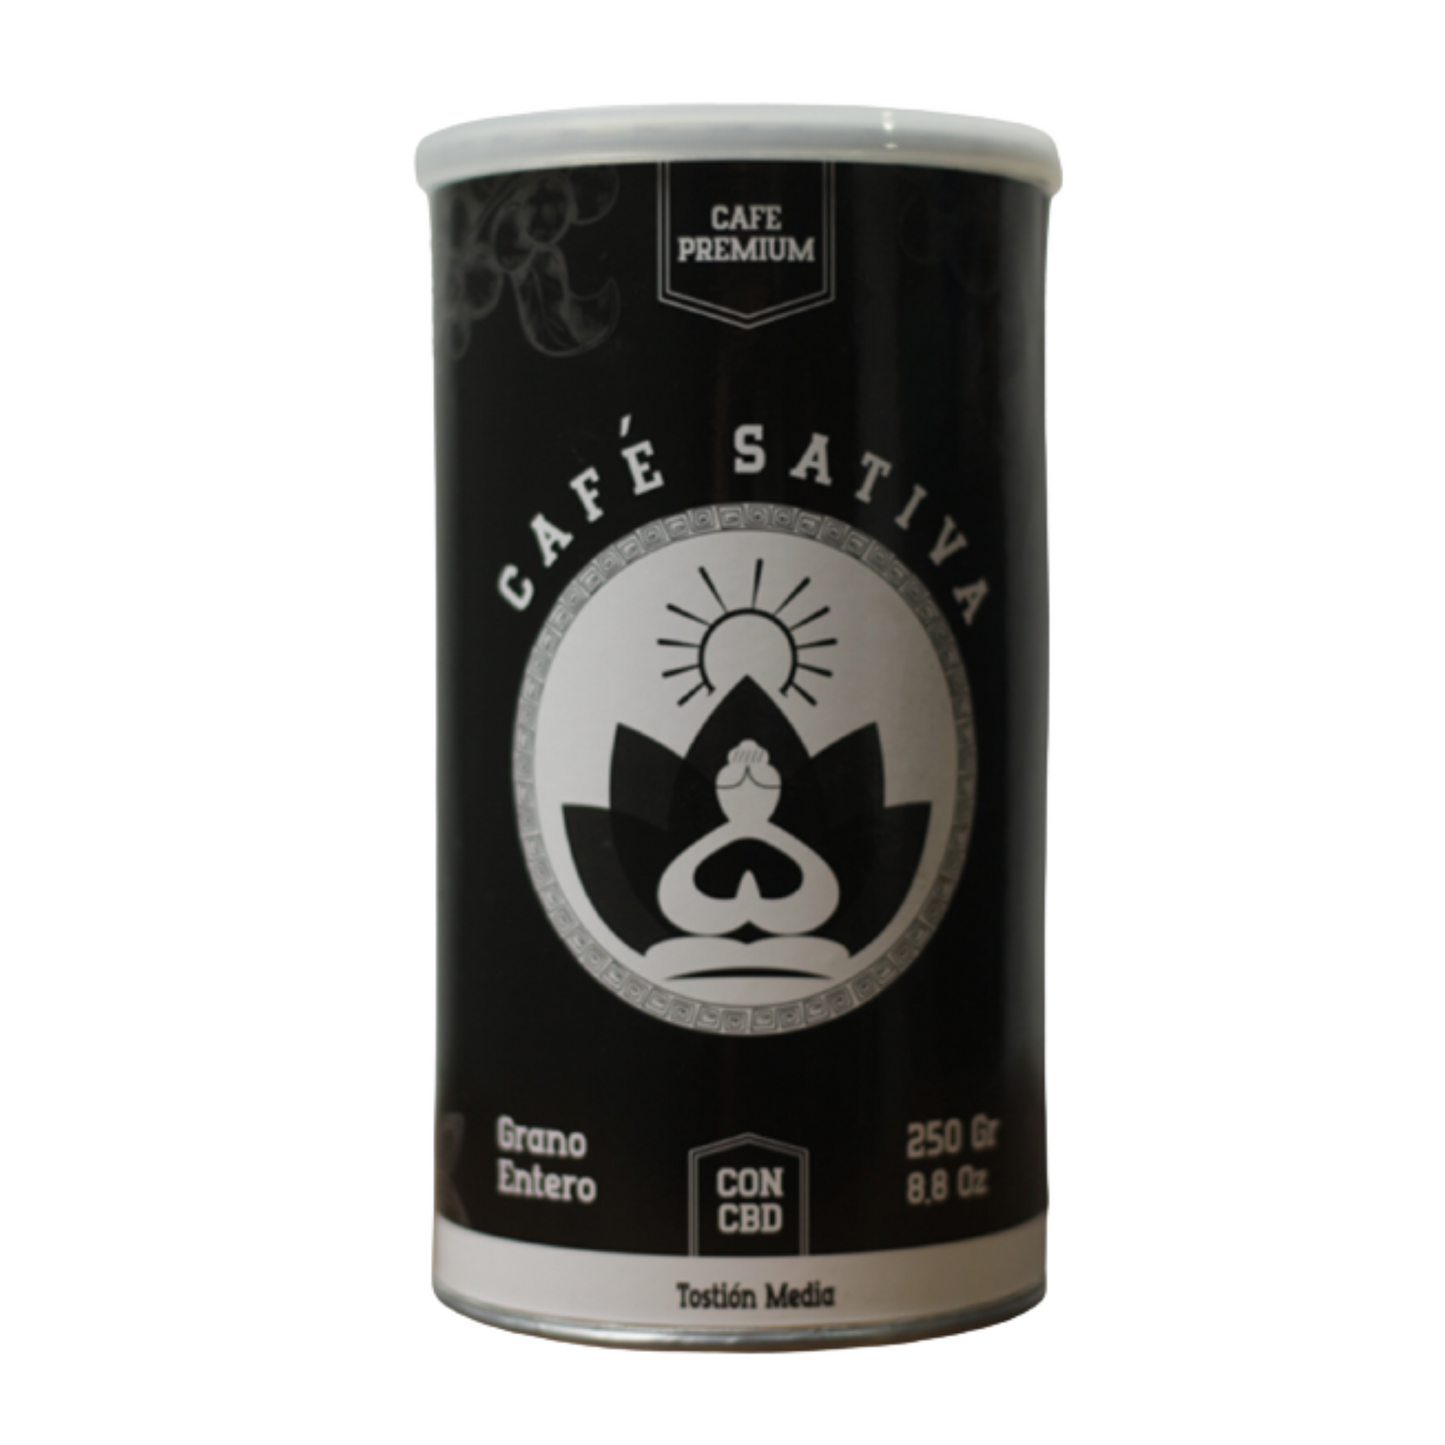 Sativa Single-origin Organic coffee with CBD 250g